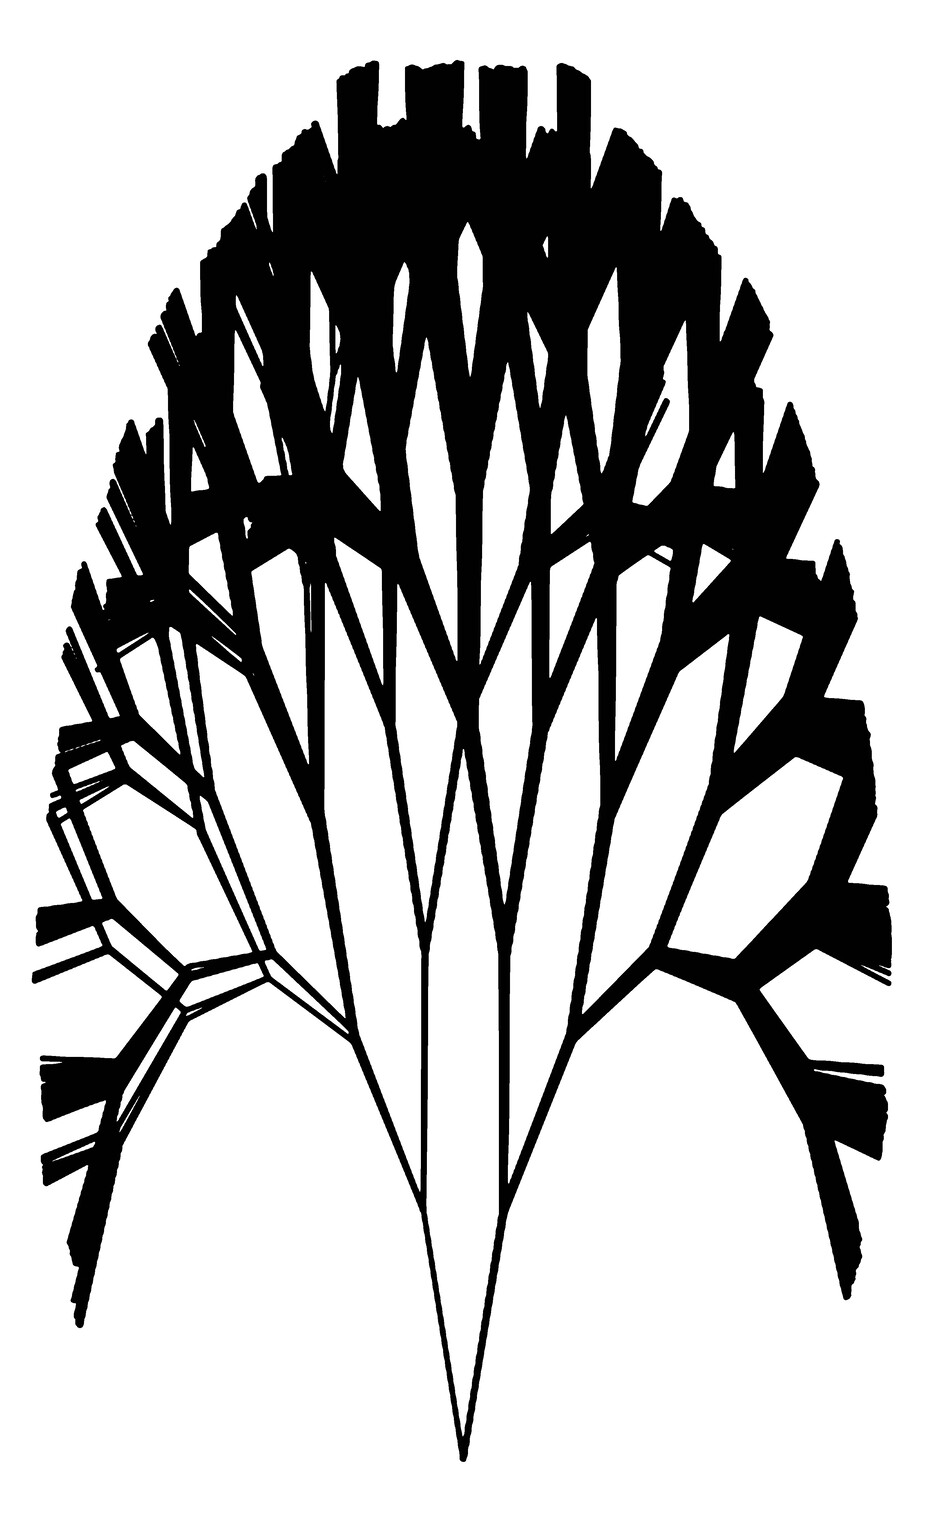 Treeangle: A geometric pattern in the shape of a tree